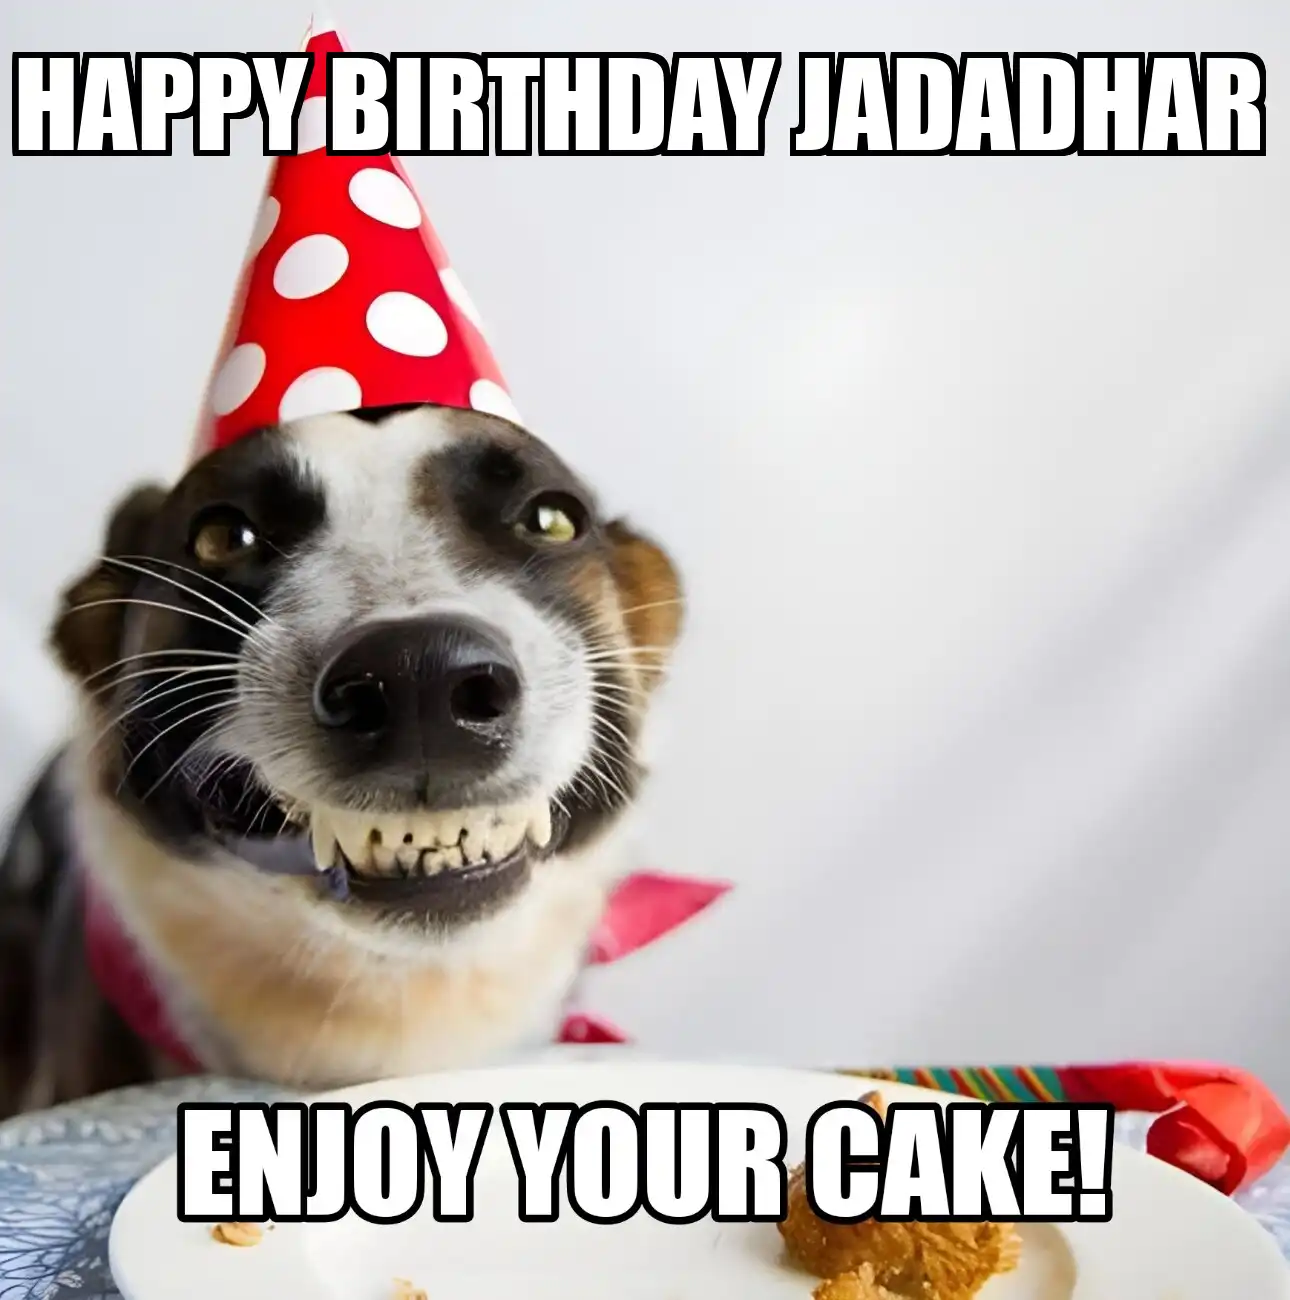 Happy Birthday Jadadhar Enjoy Your Cake Dog Meme